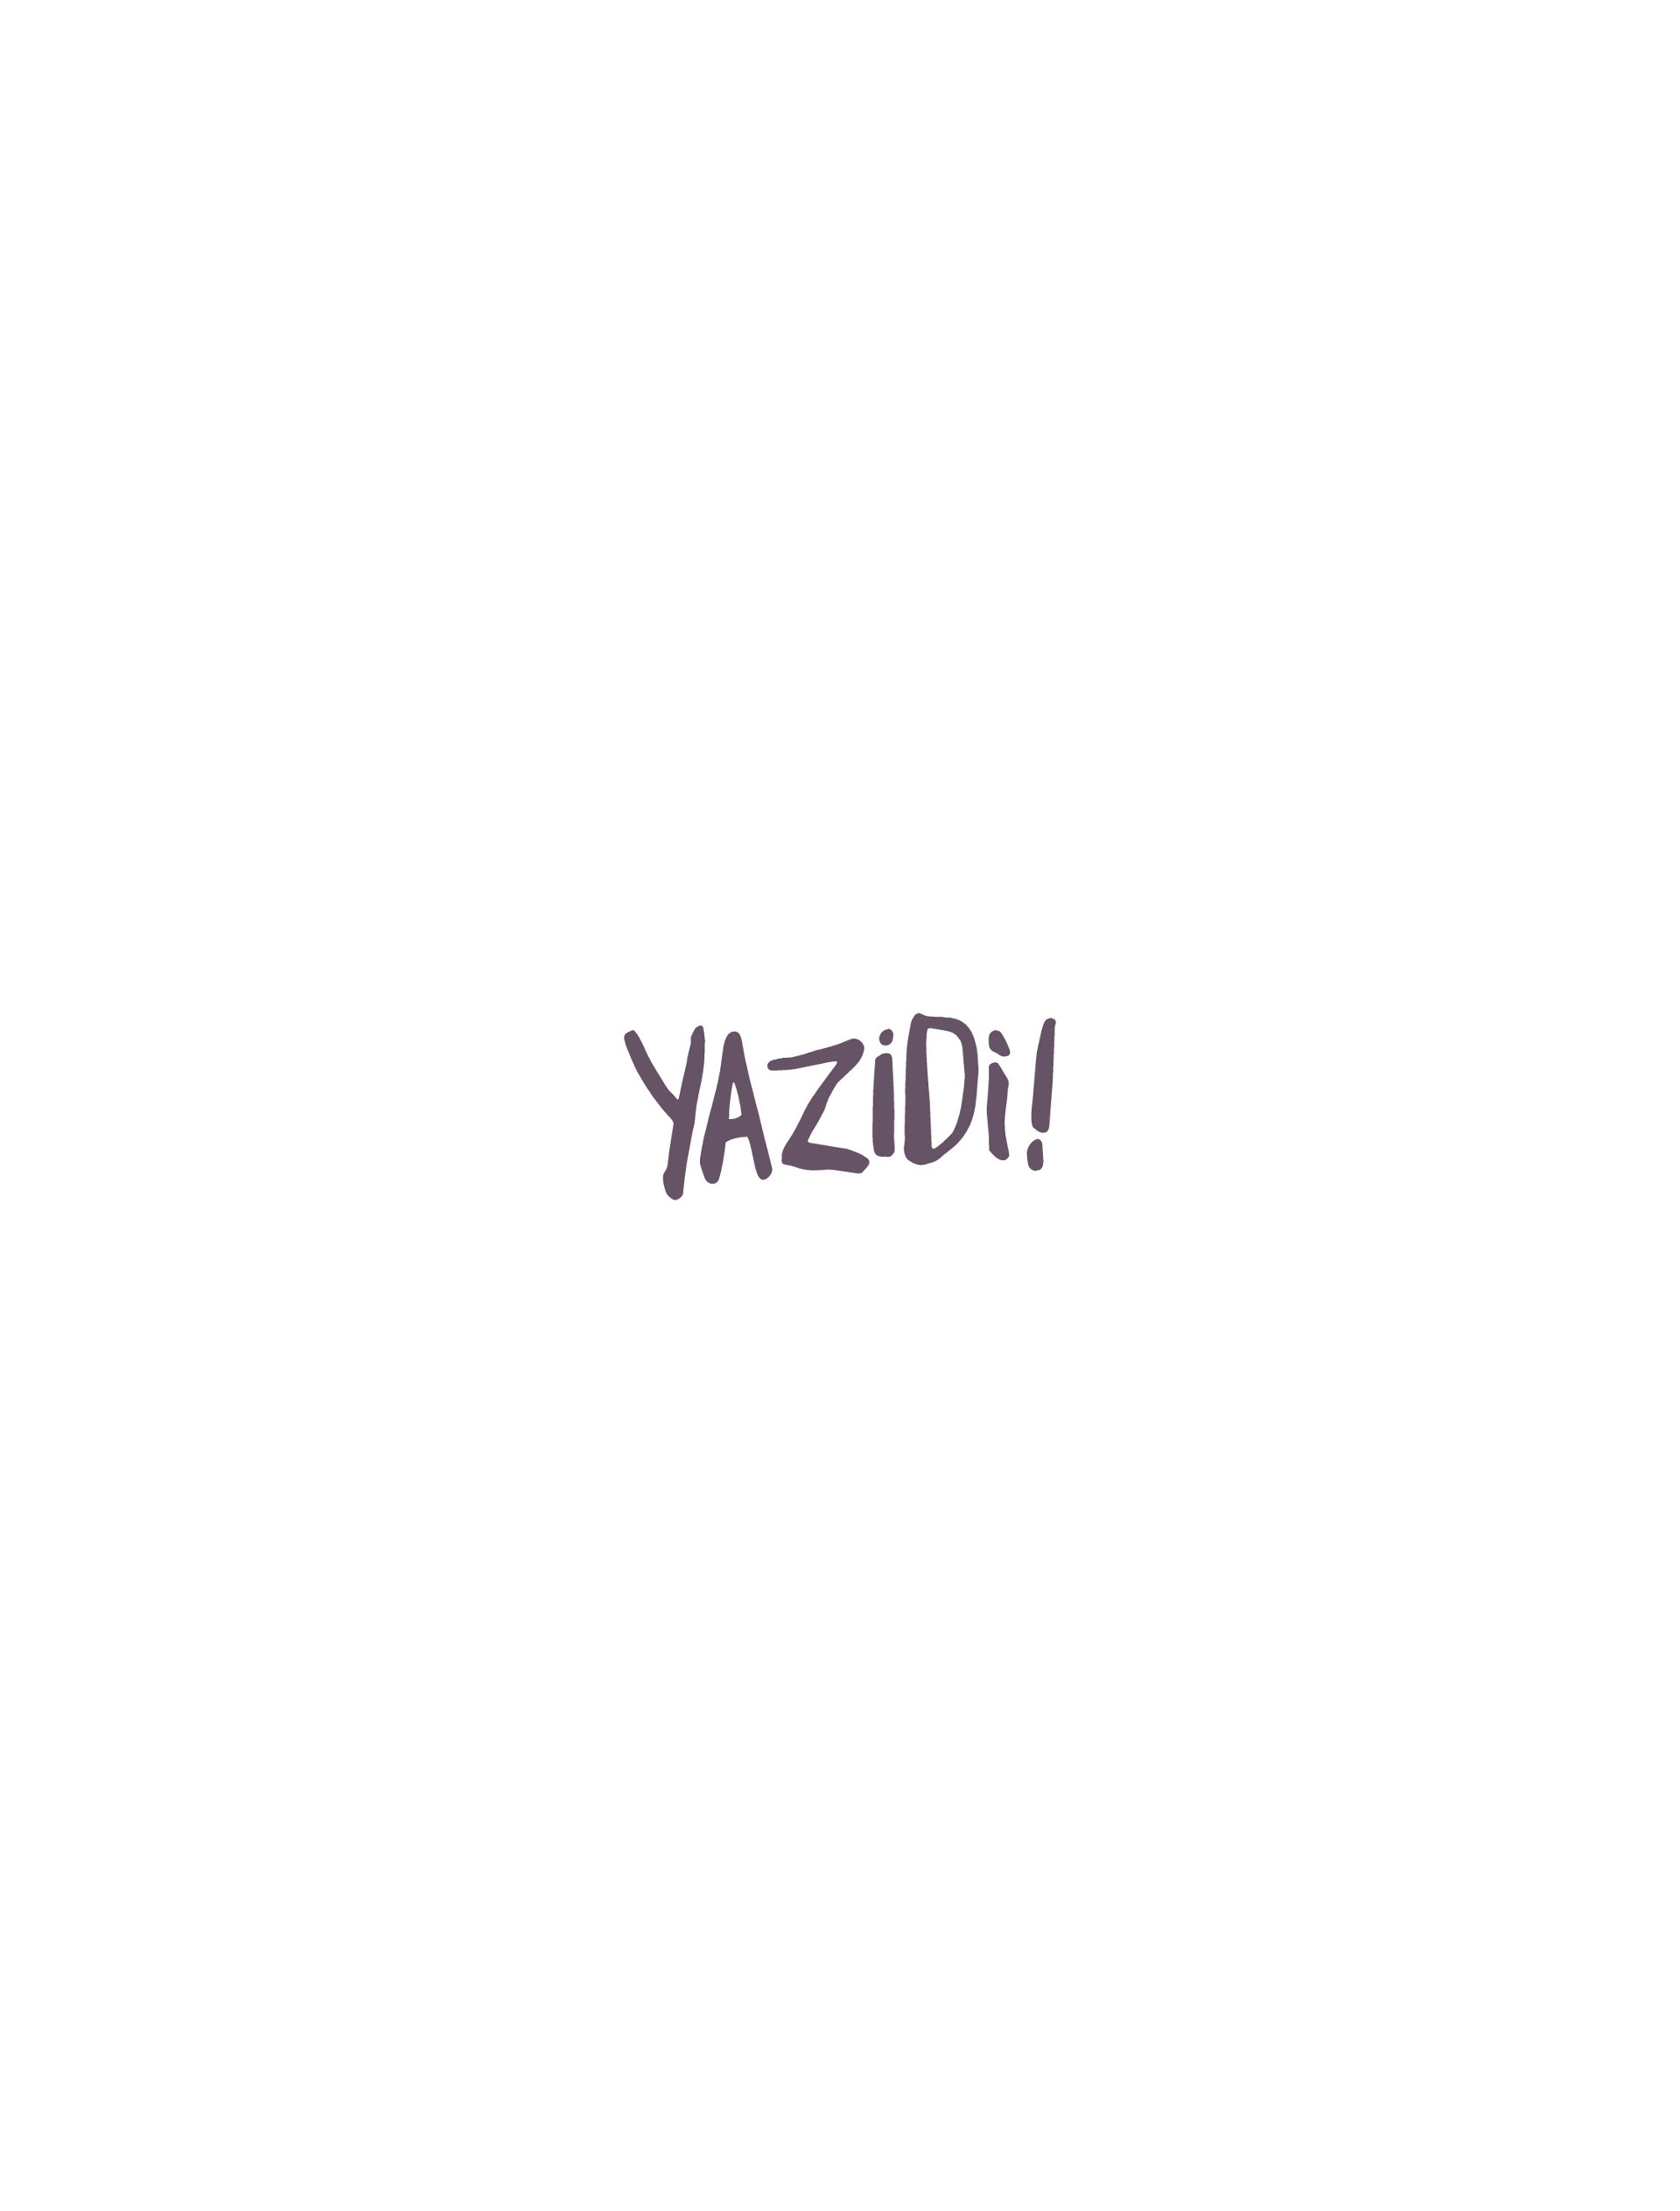 Read online Yazidi! comic -  Issue # TPB - 2